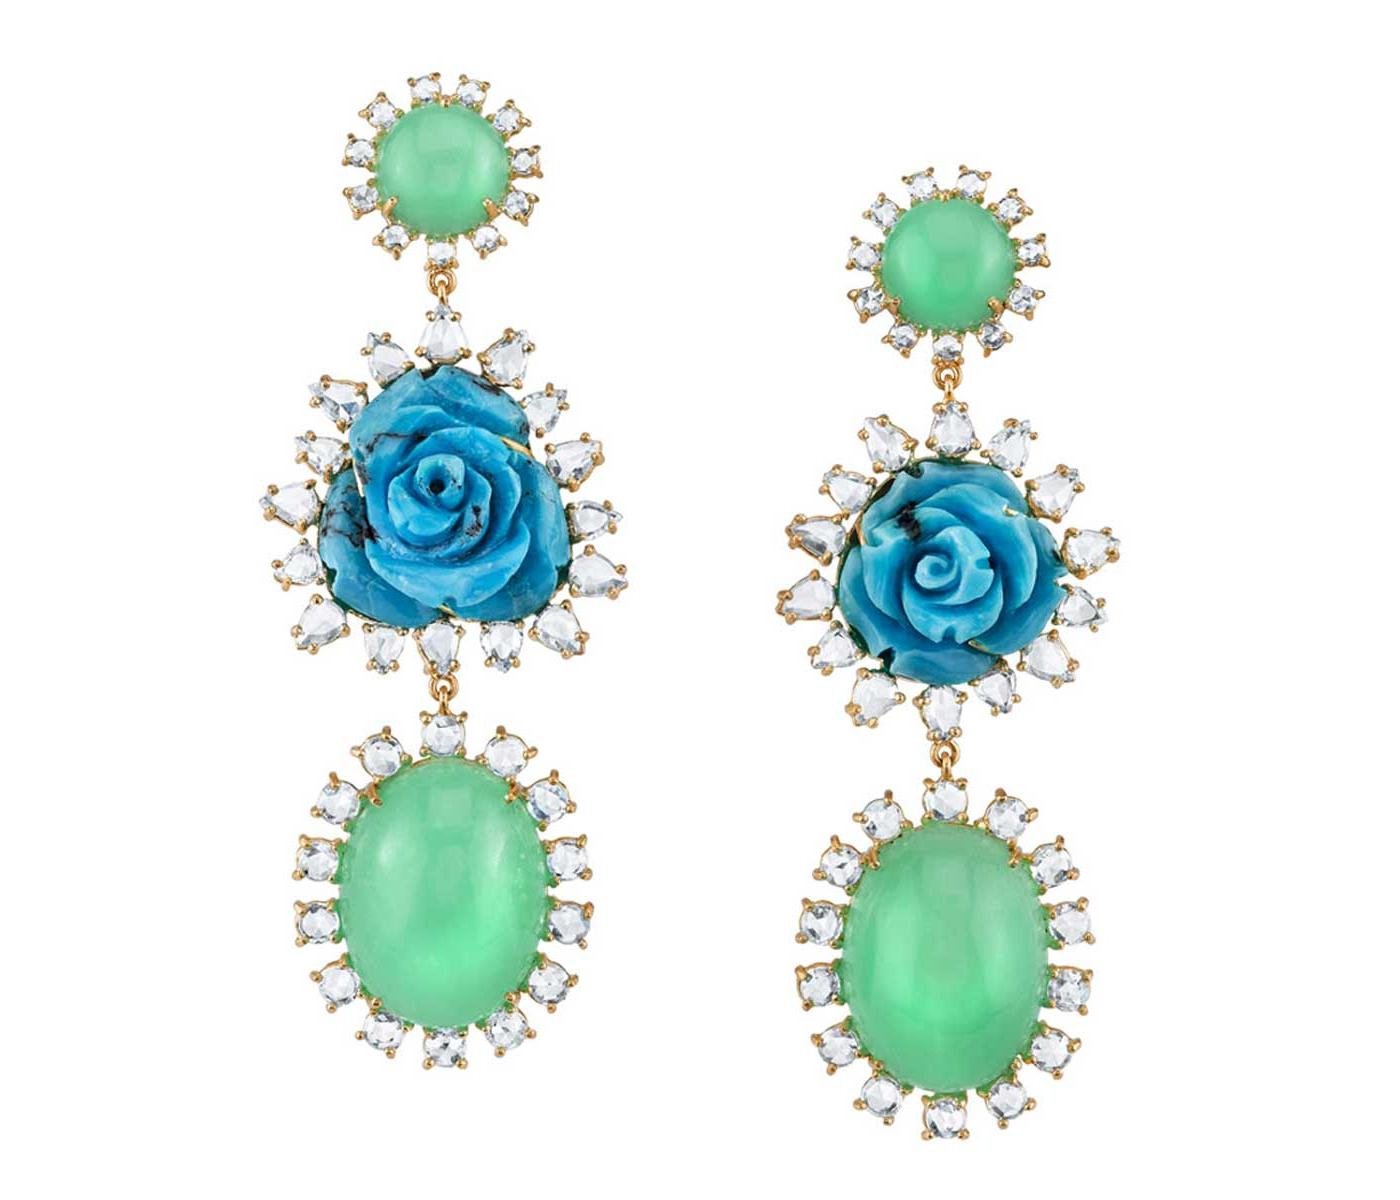 Earrings by Irene Neuwirth Jewelry